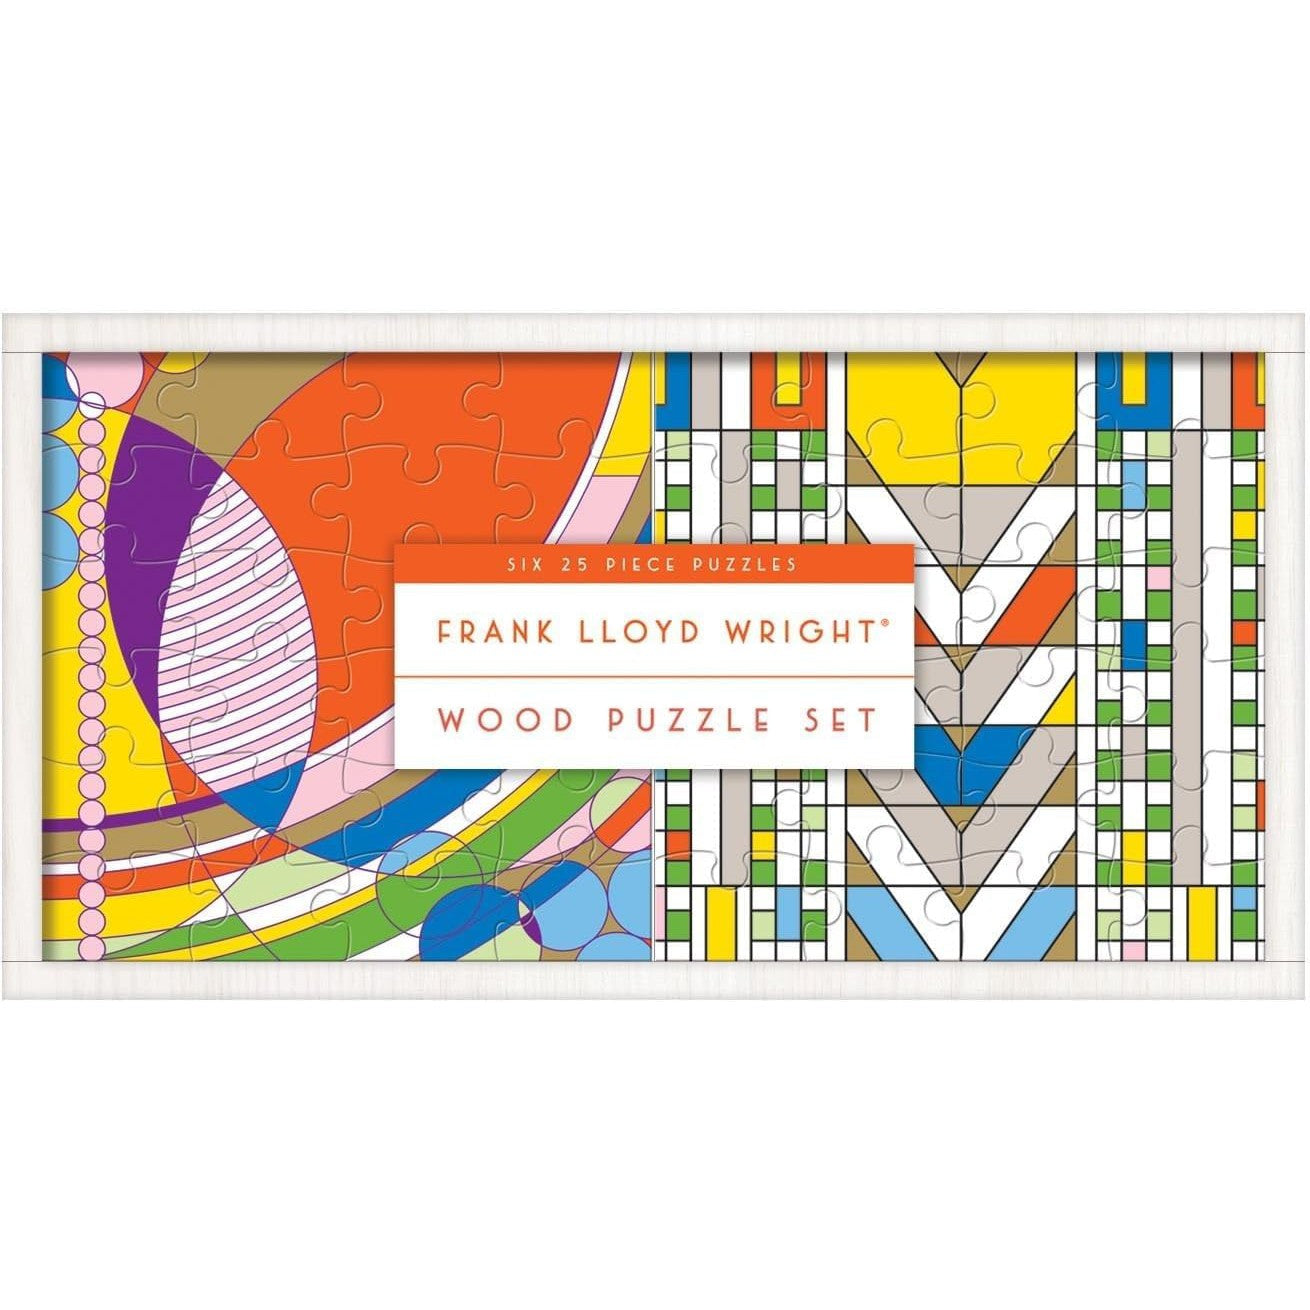 Frank Lloyd Wright Wood Puzzle Set